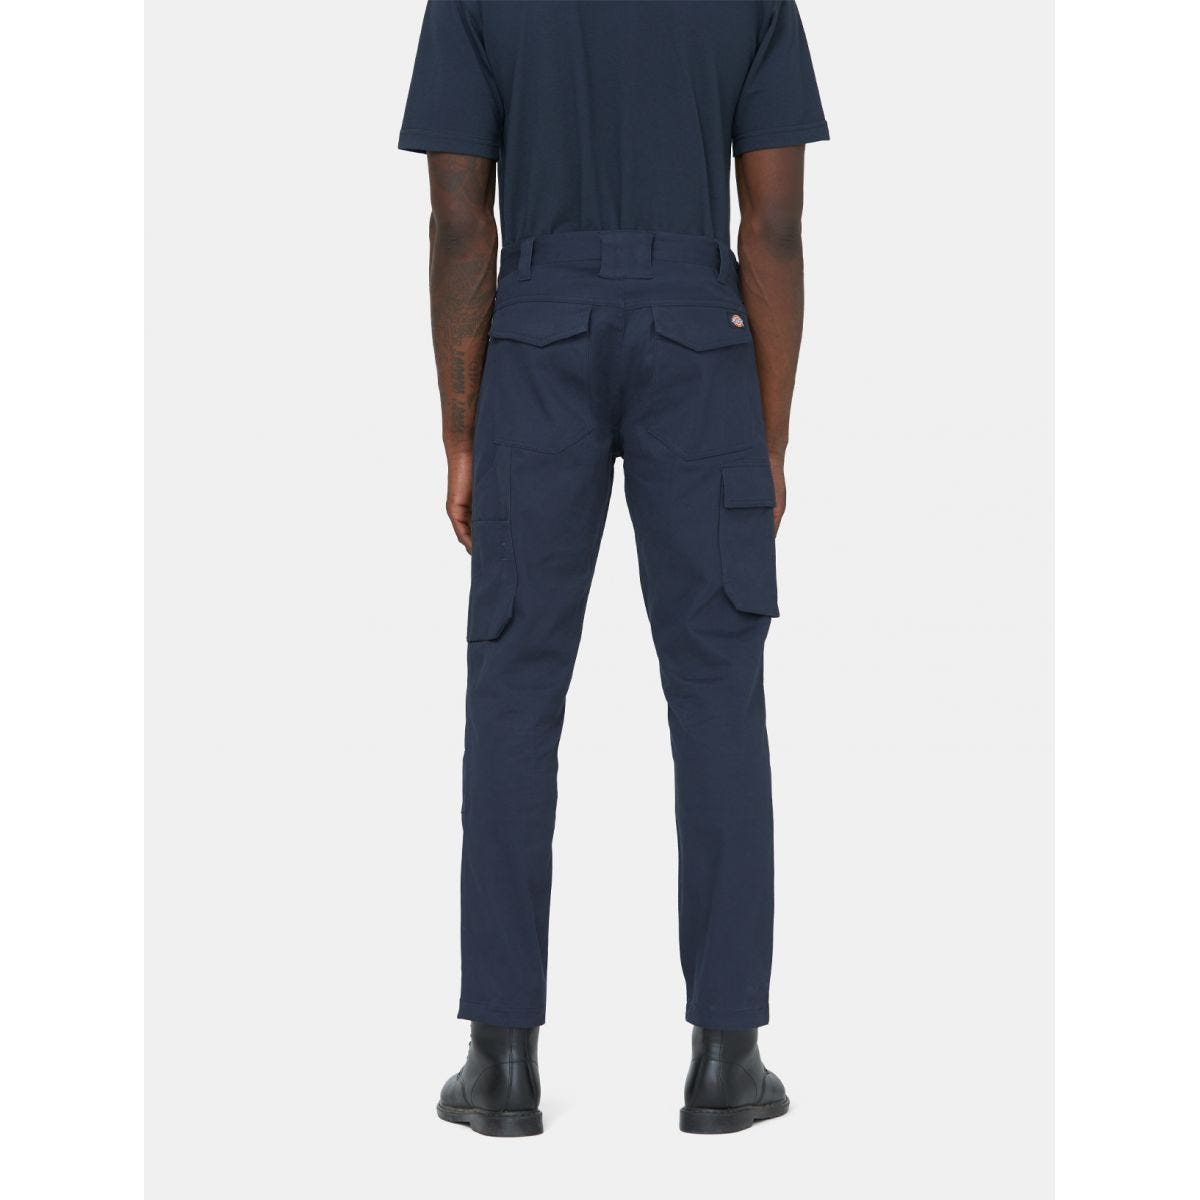 Pantalon Lead In Flex Bleu marine - Dickies - Taille 48 2